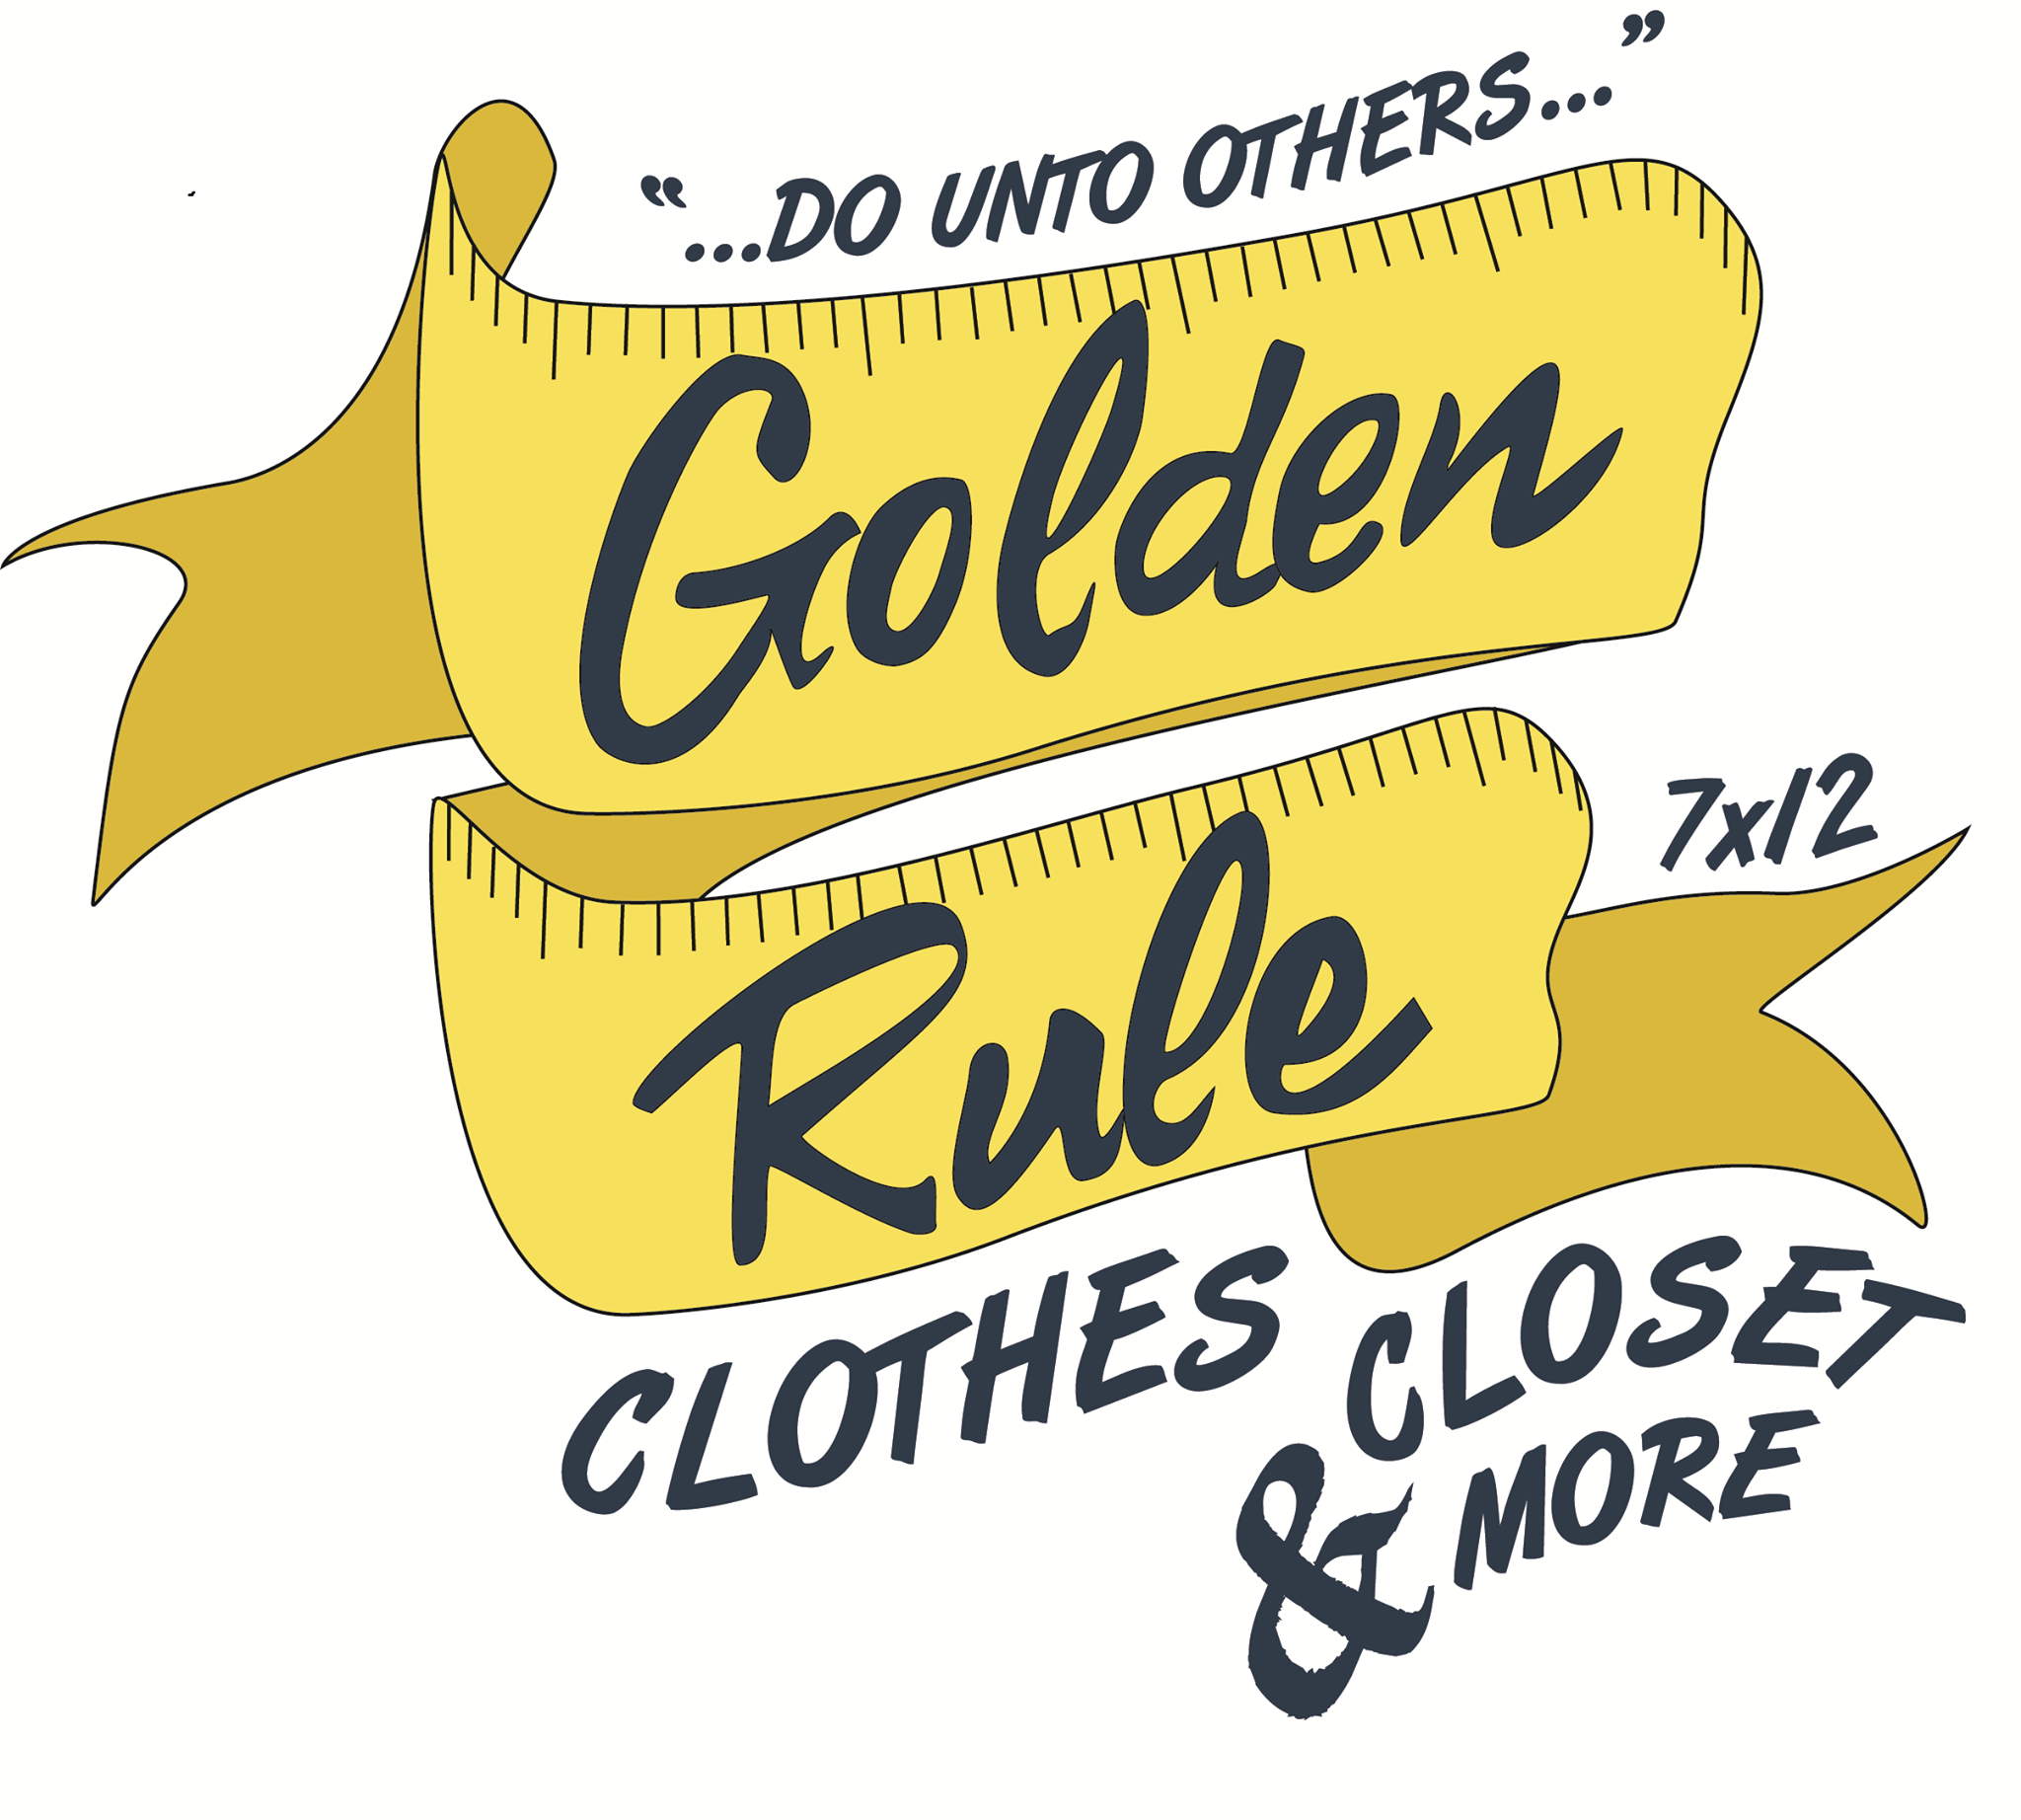 Golden Rule Clothes Closet